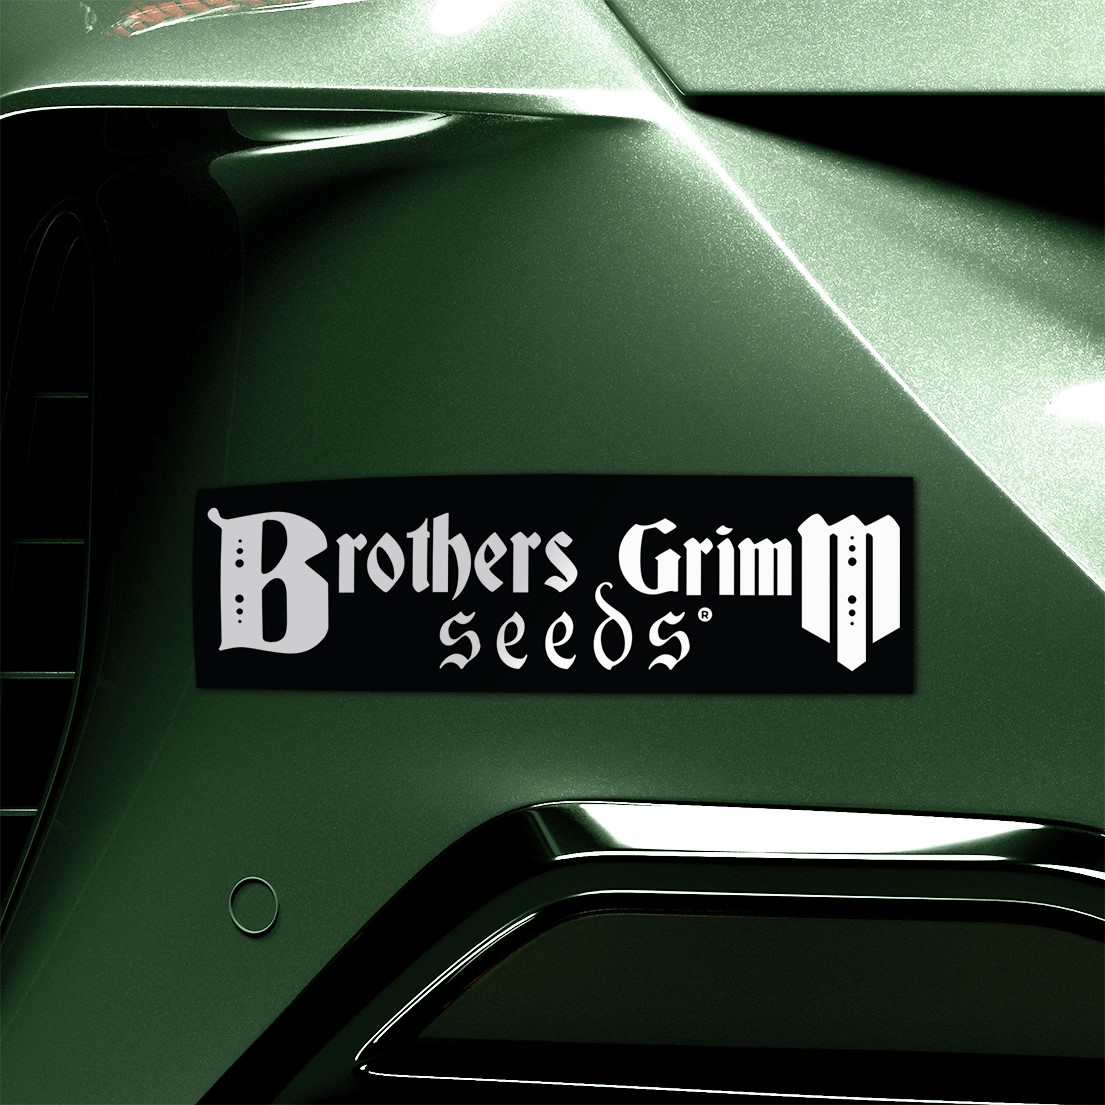 brothers grimm seeds bumper sticker